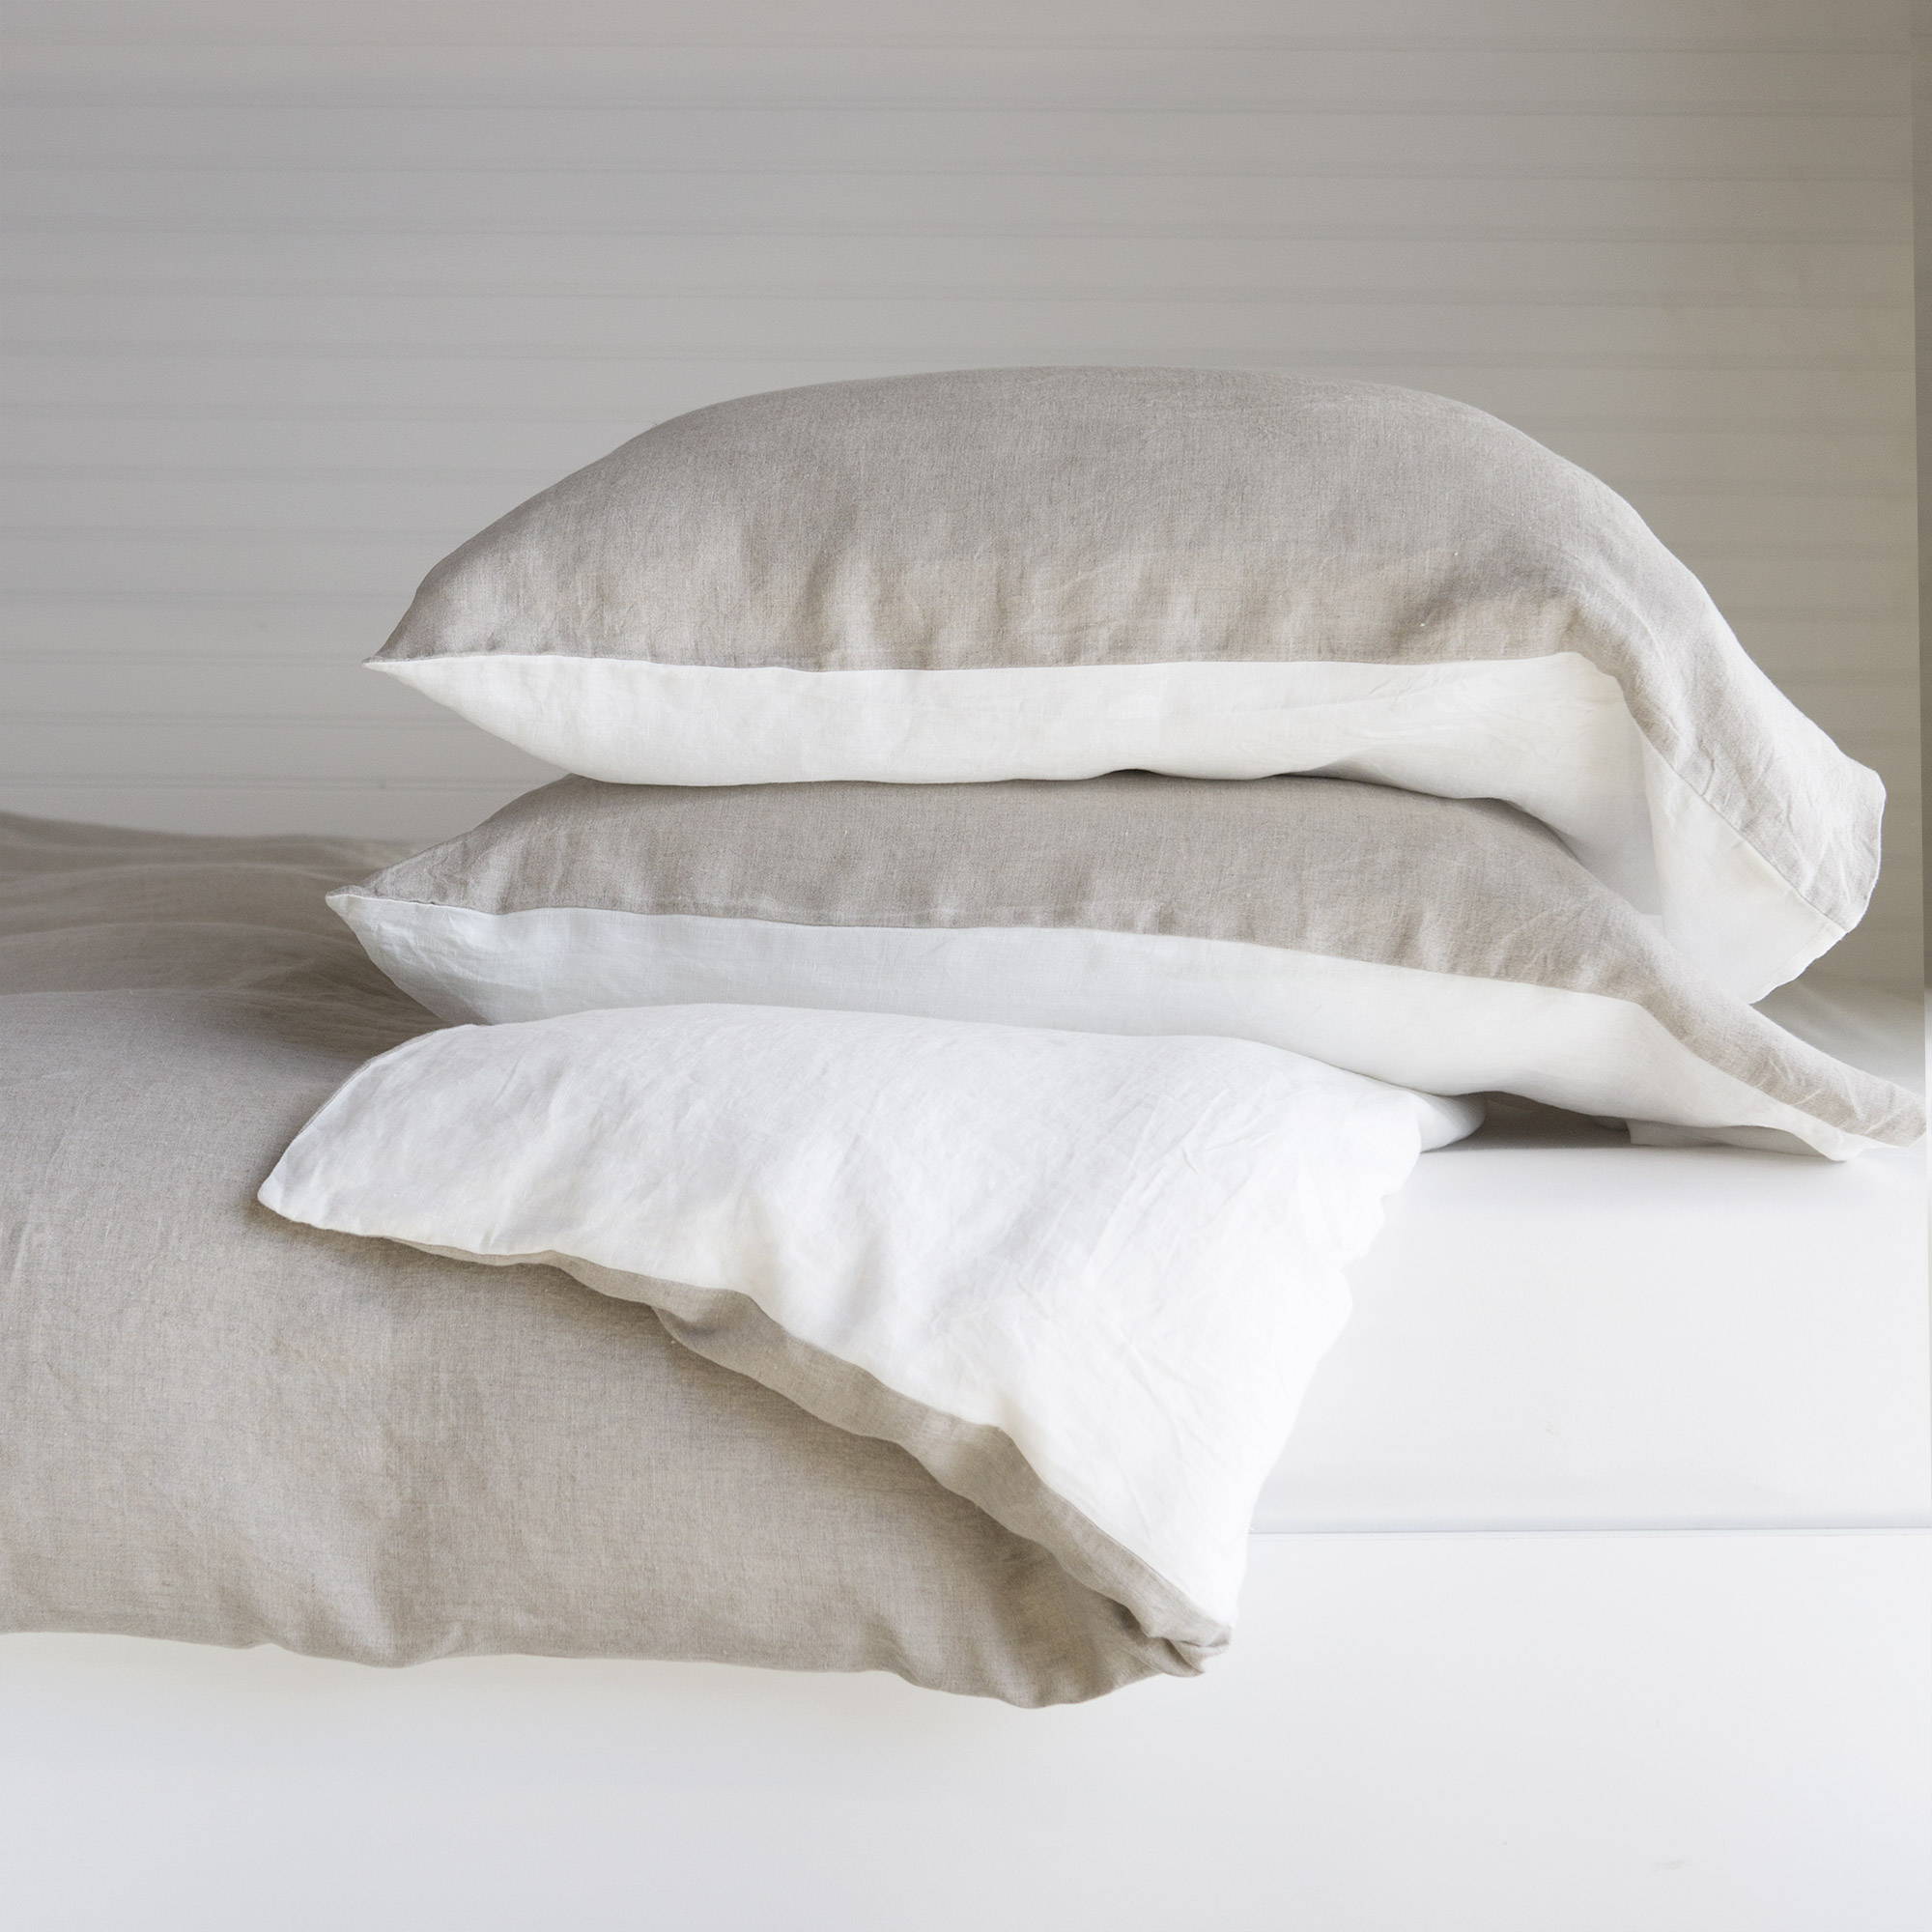 Linen duvet and pillowcases